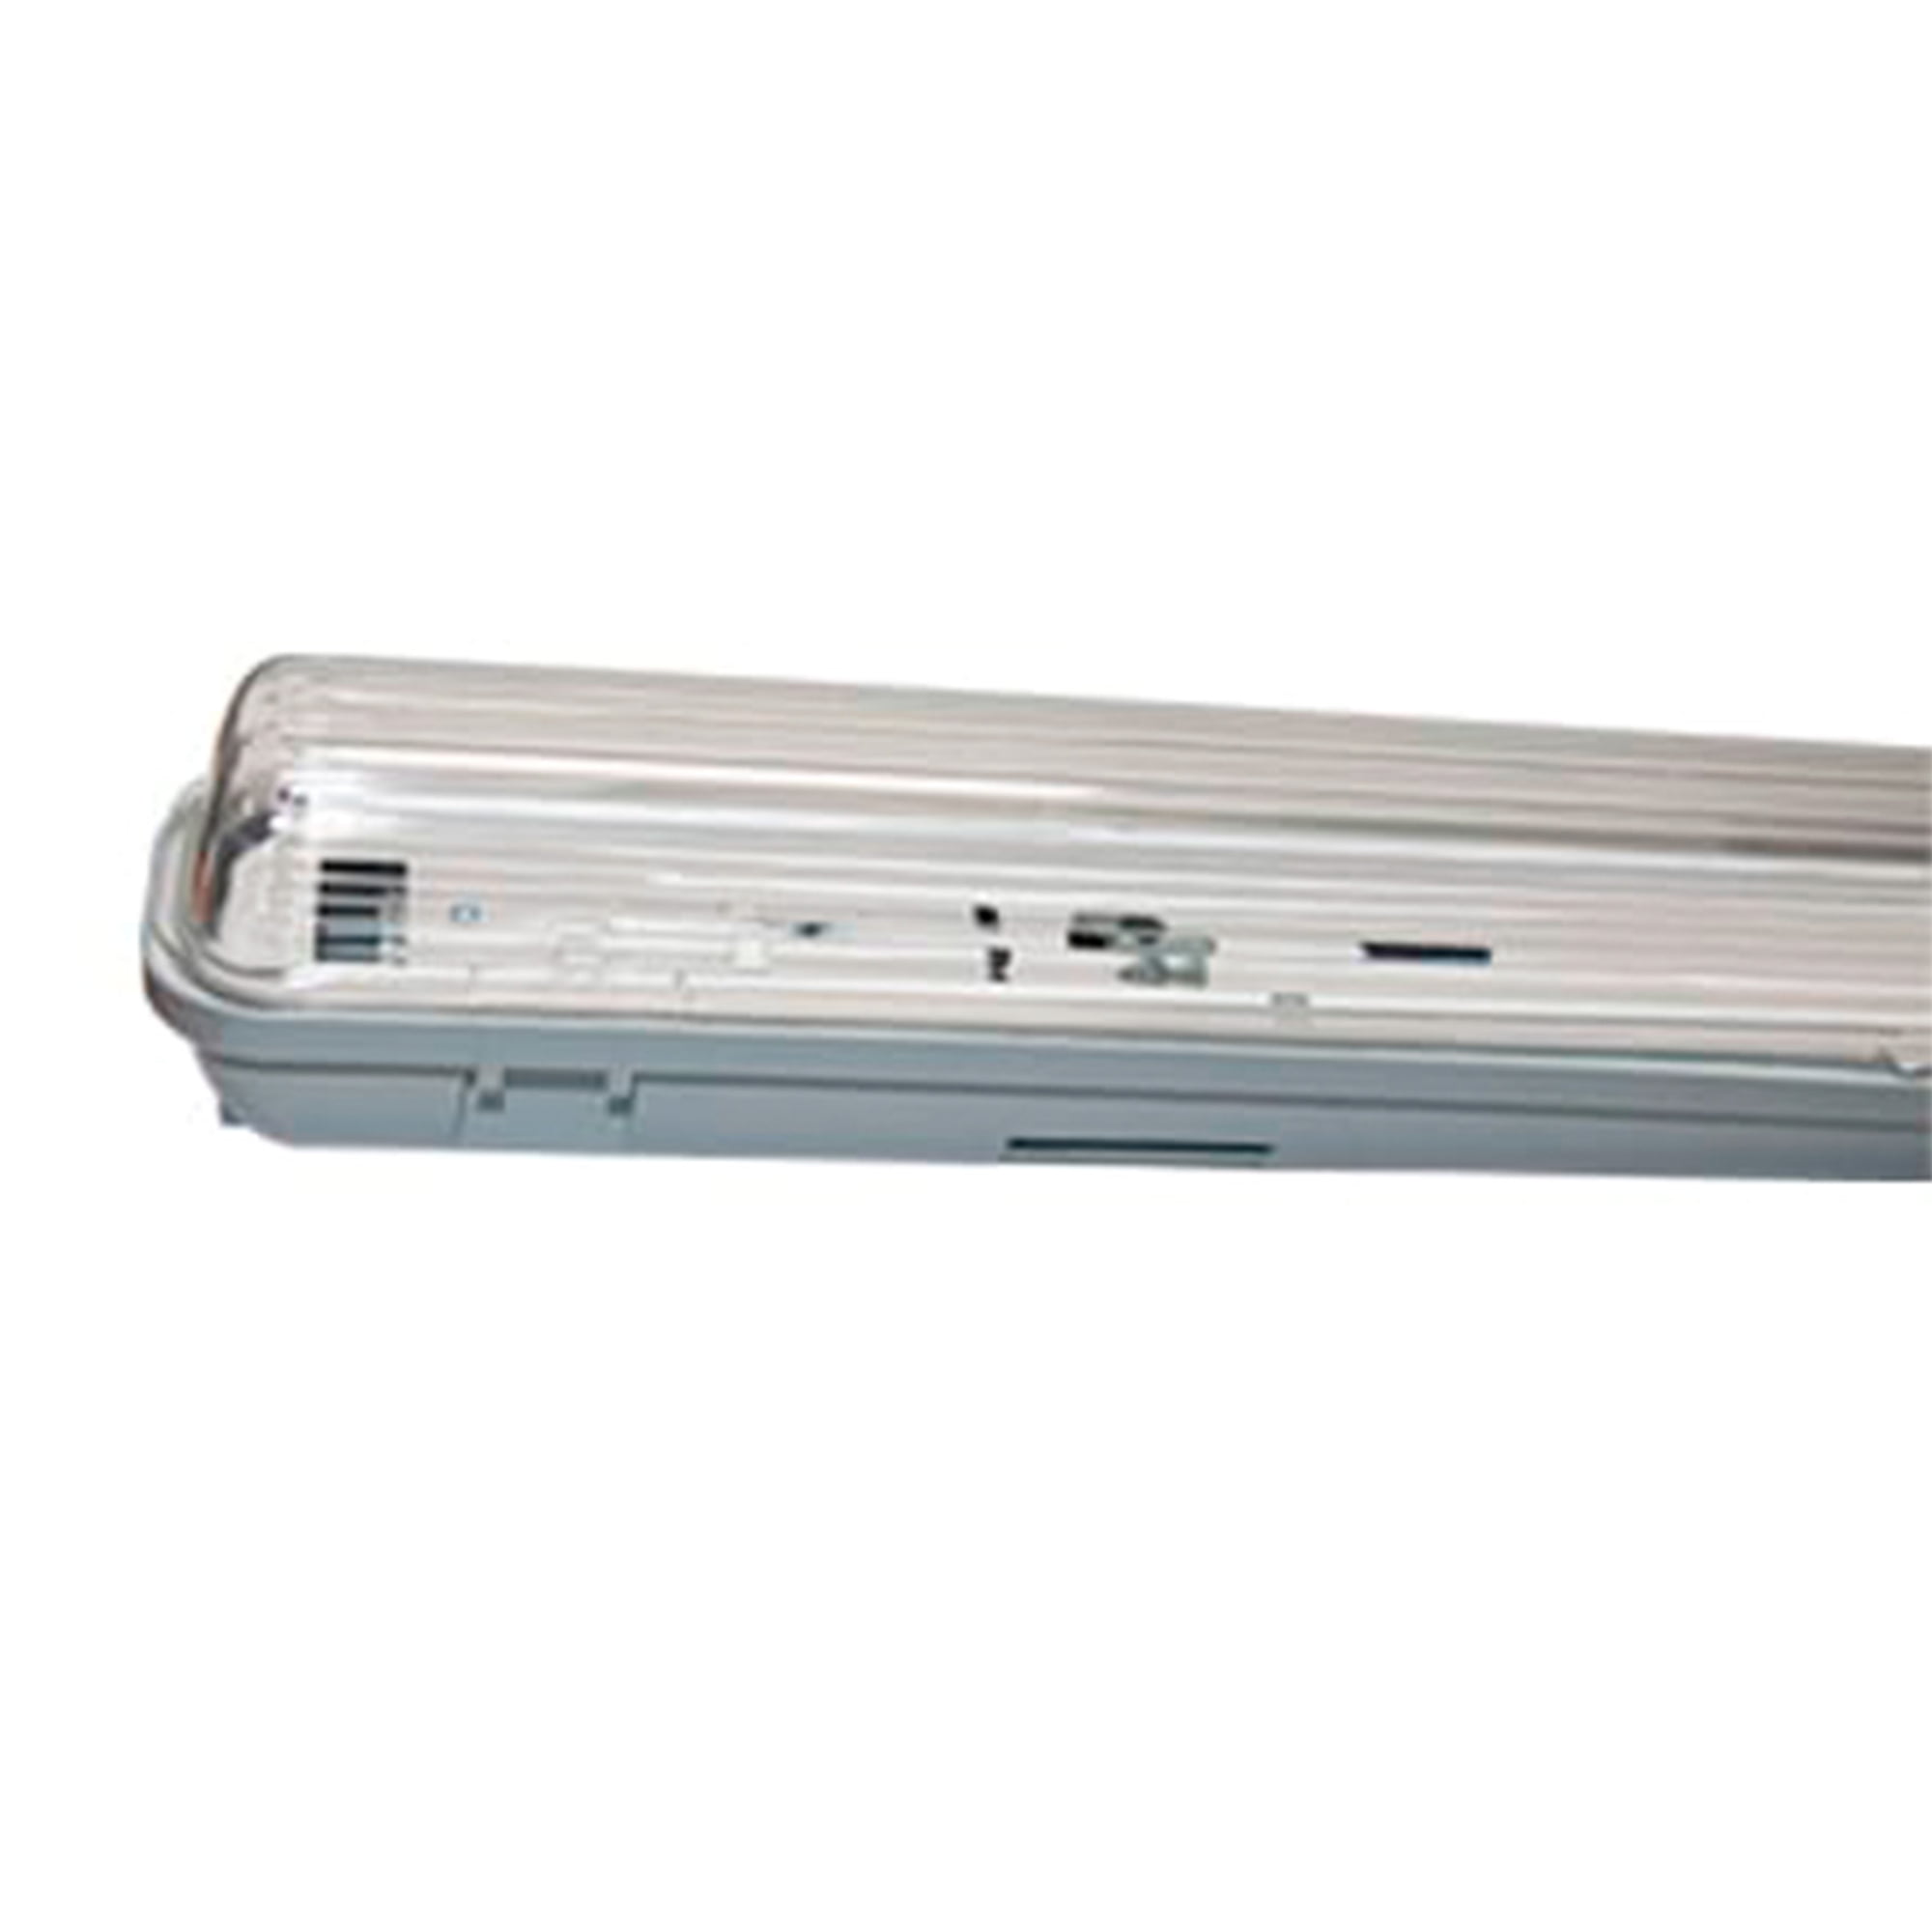 REFLECTOR LED 50W, 5000lm, IP65 IK08, 6500K 185-265VAC; Modelo: NV